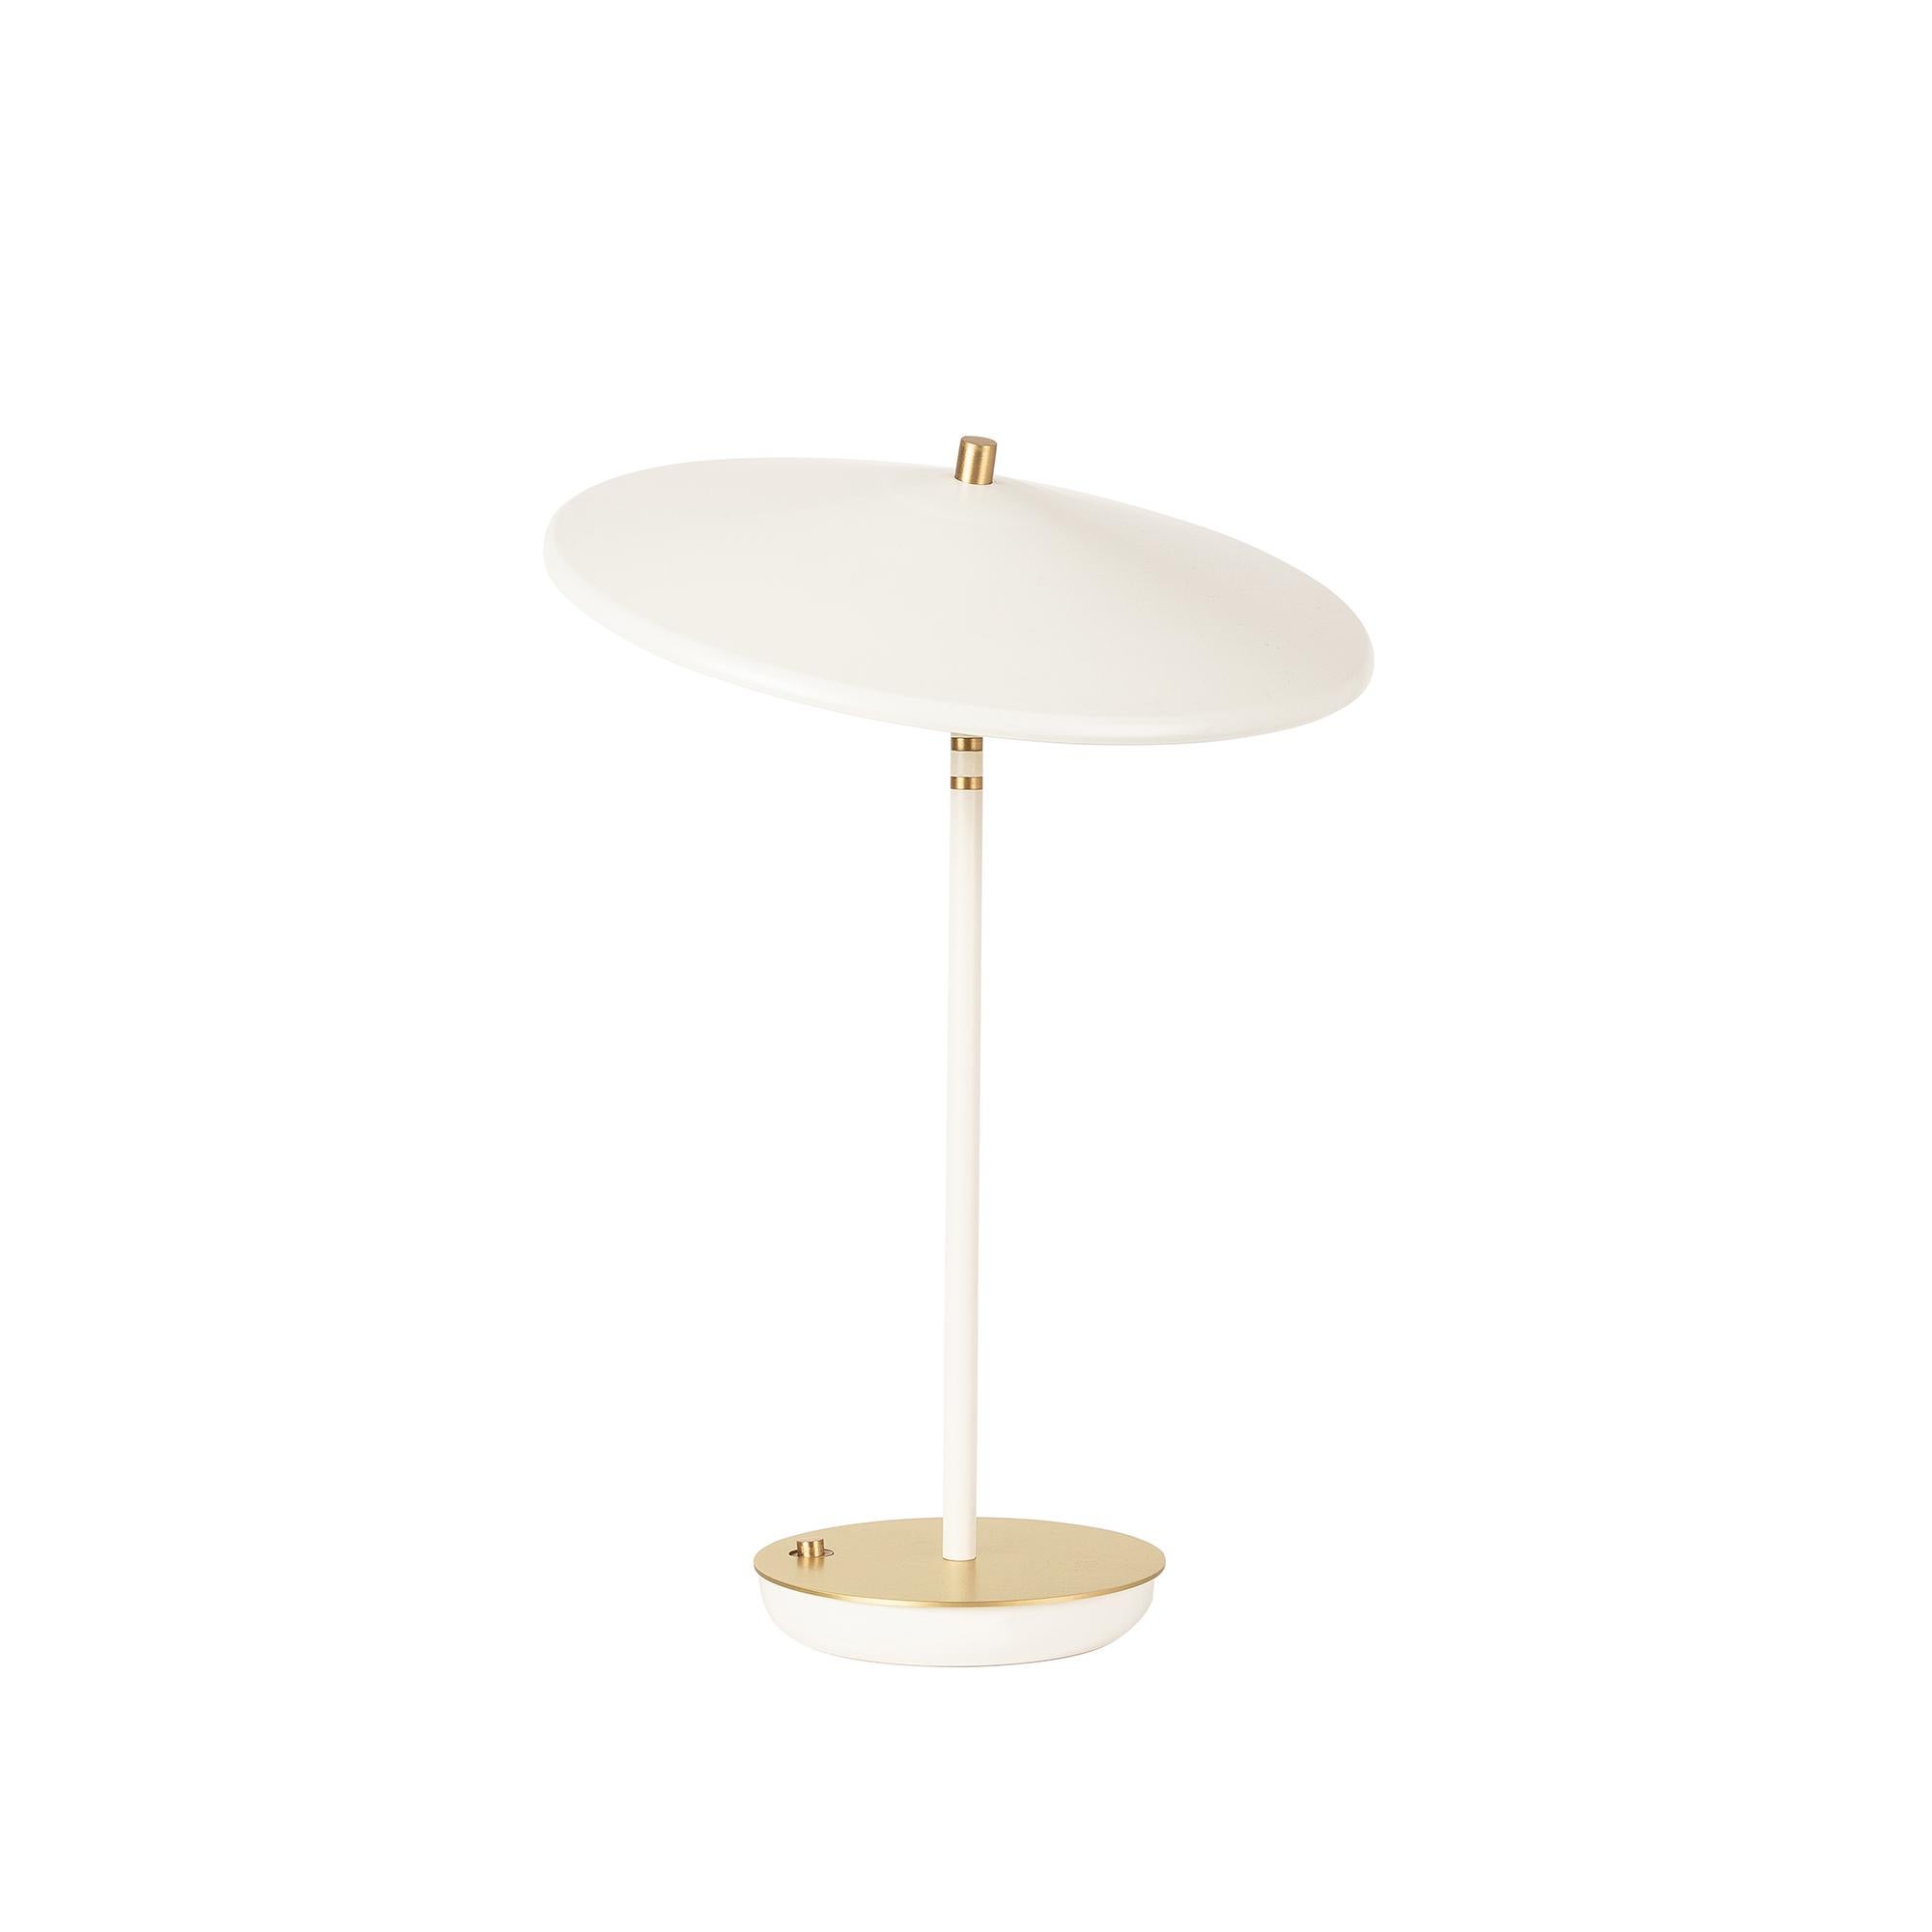 Plated Artist Brass Tilting Table Lamp, White & Gold, Parisian Beret Desk Lamp